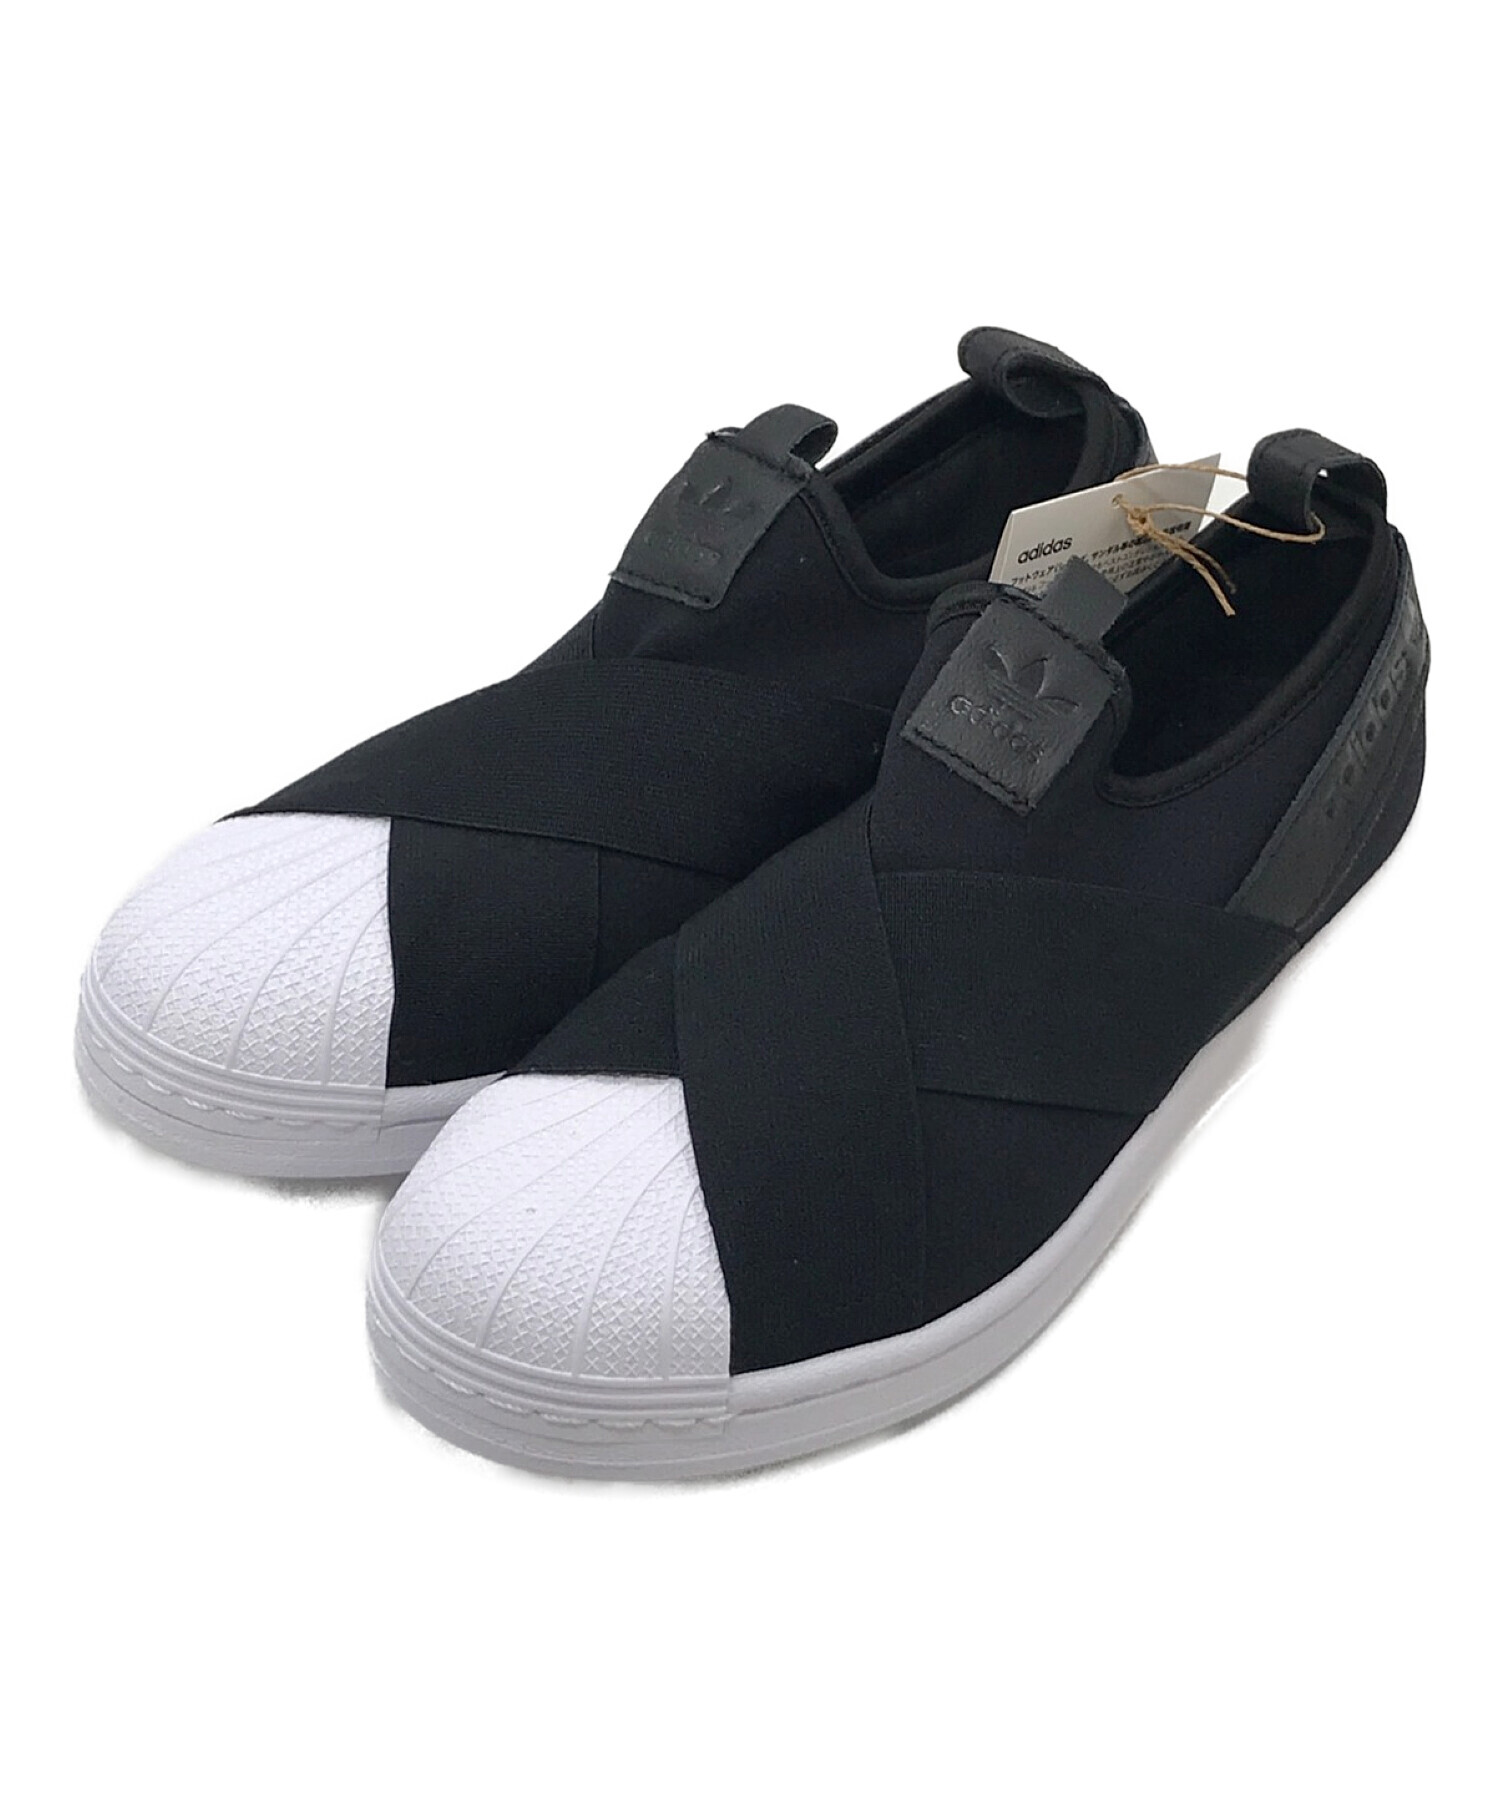 adidas (アディダス) SST SLIPONスーパースタースリッポン ブラック×ホワイト サイズ:24㎝ 未使用品